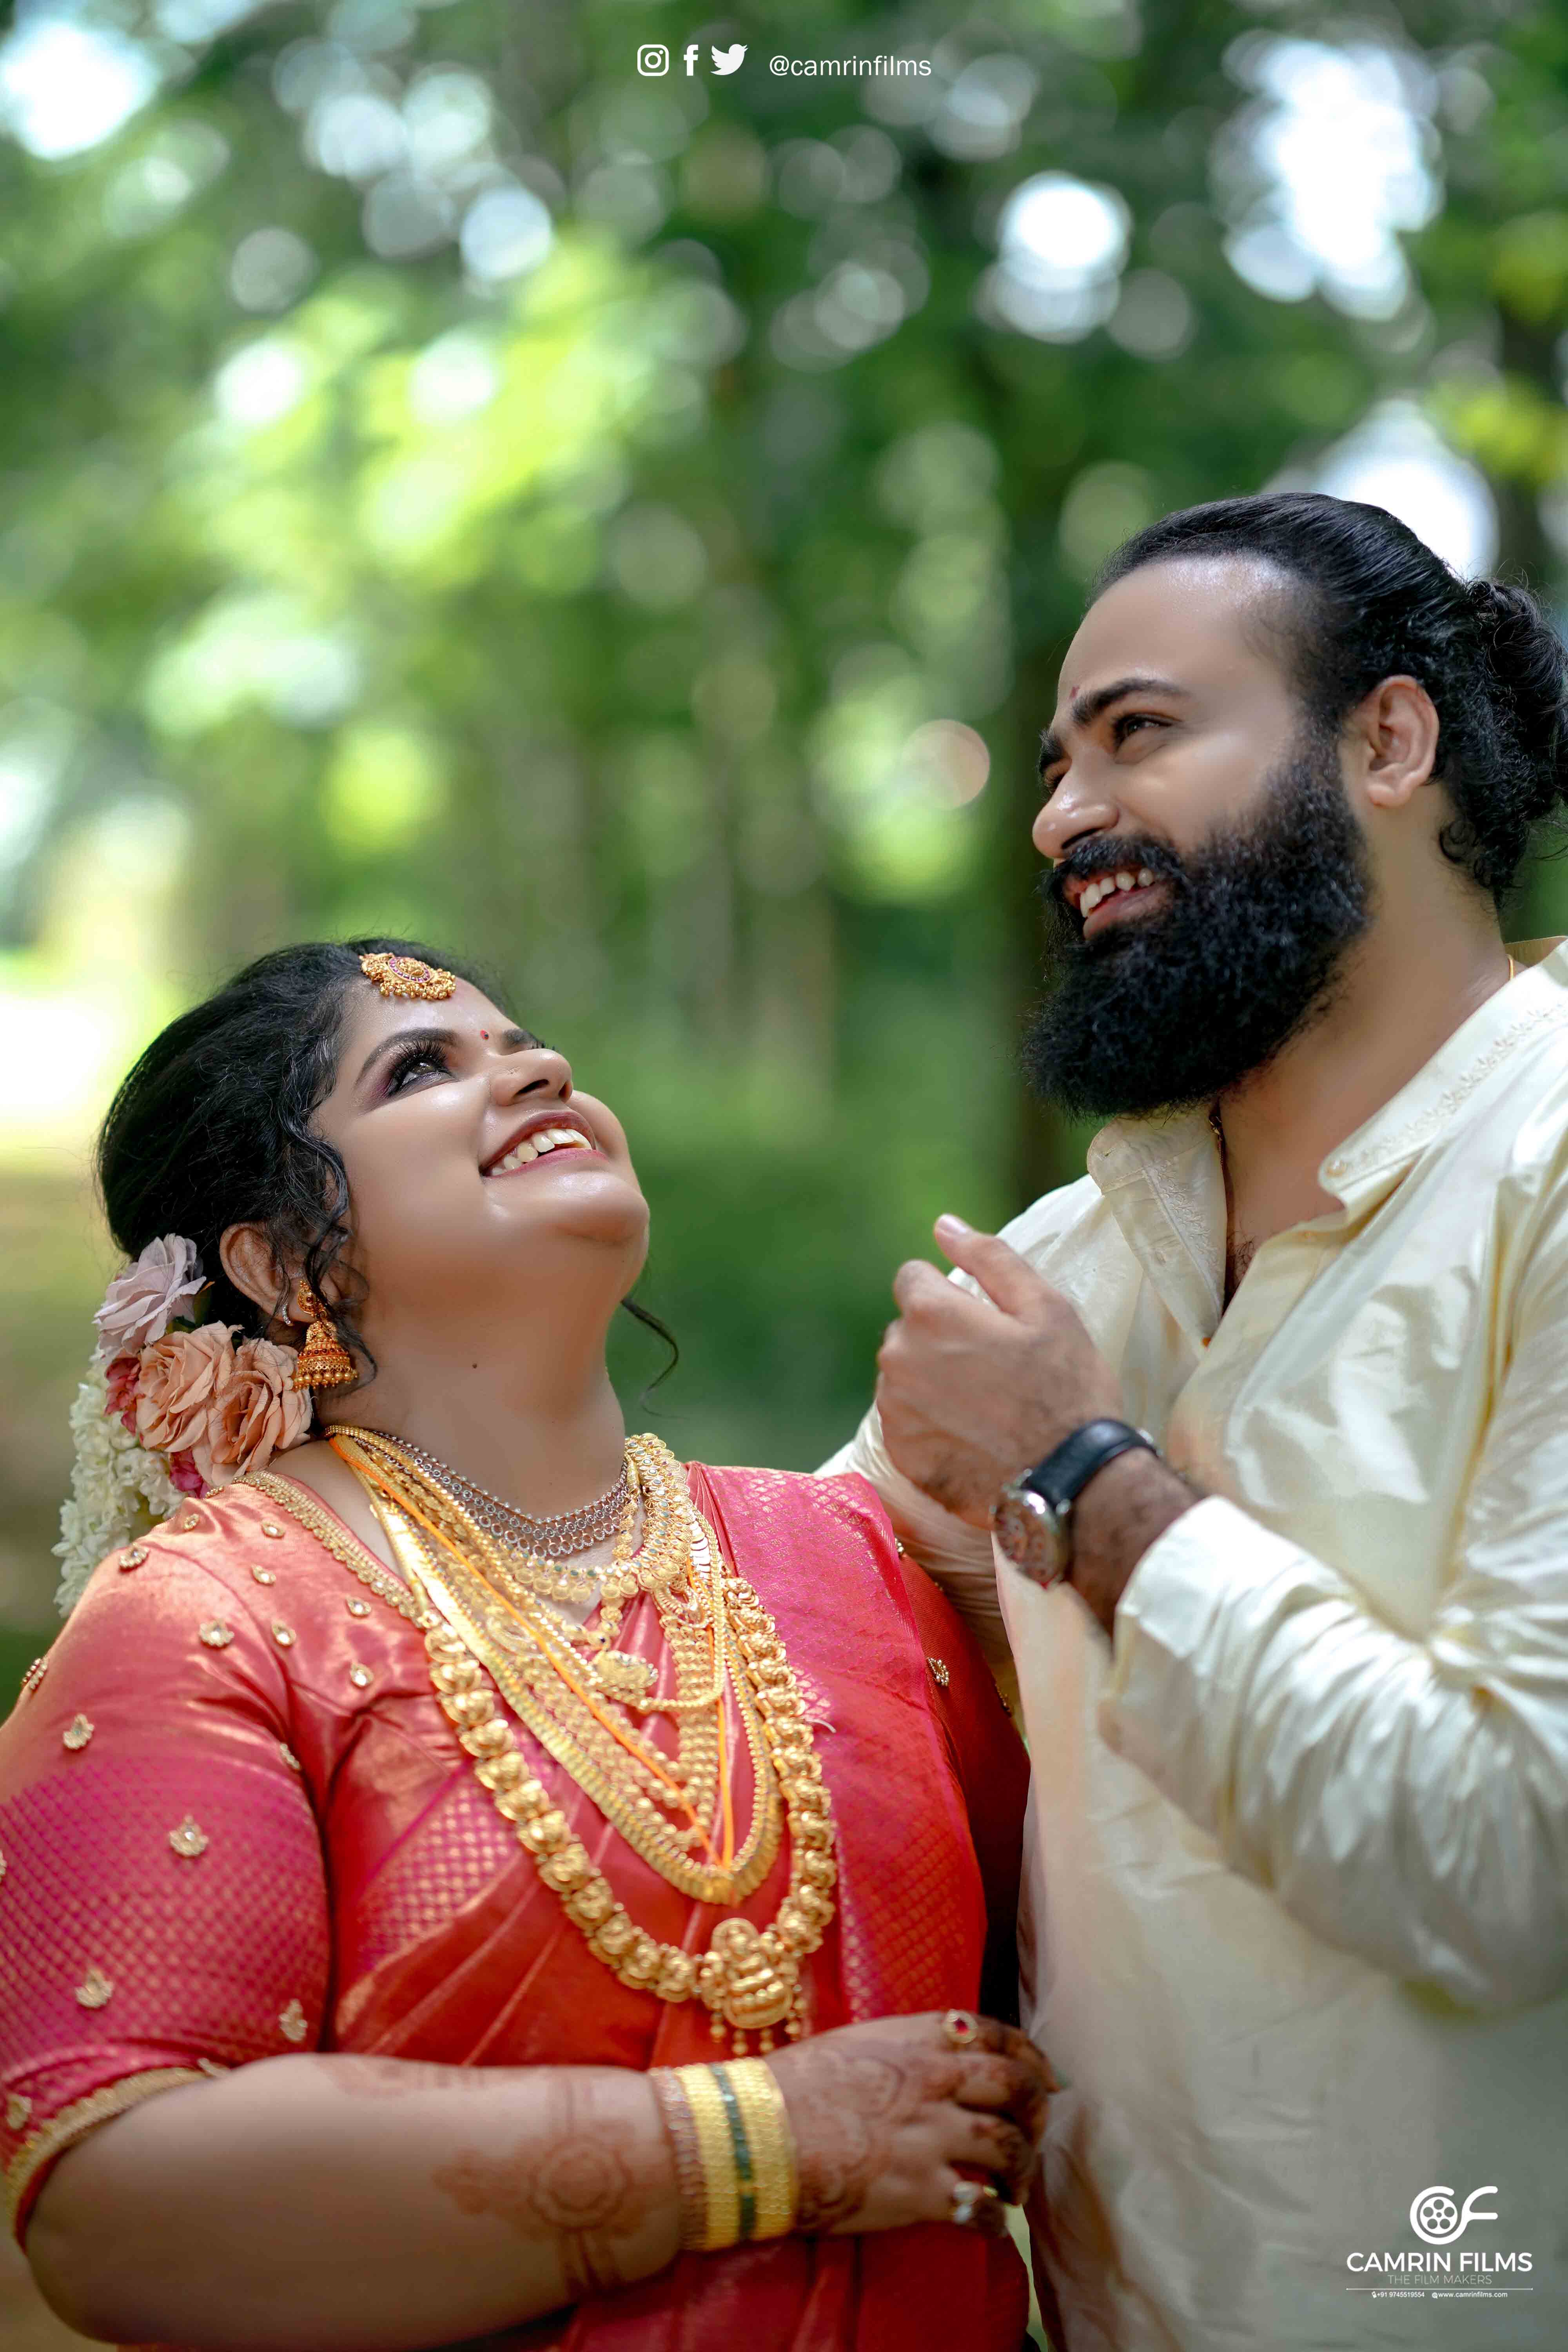 840 Likes, 2 Comments - Kerala Wedding Styles (@keralaweddingstyles) on In…  | Wedding couple poses photography, Indian wedding photography poses, Bride  photos poses